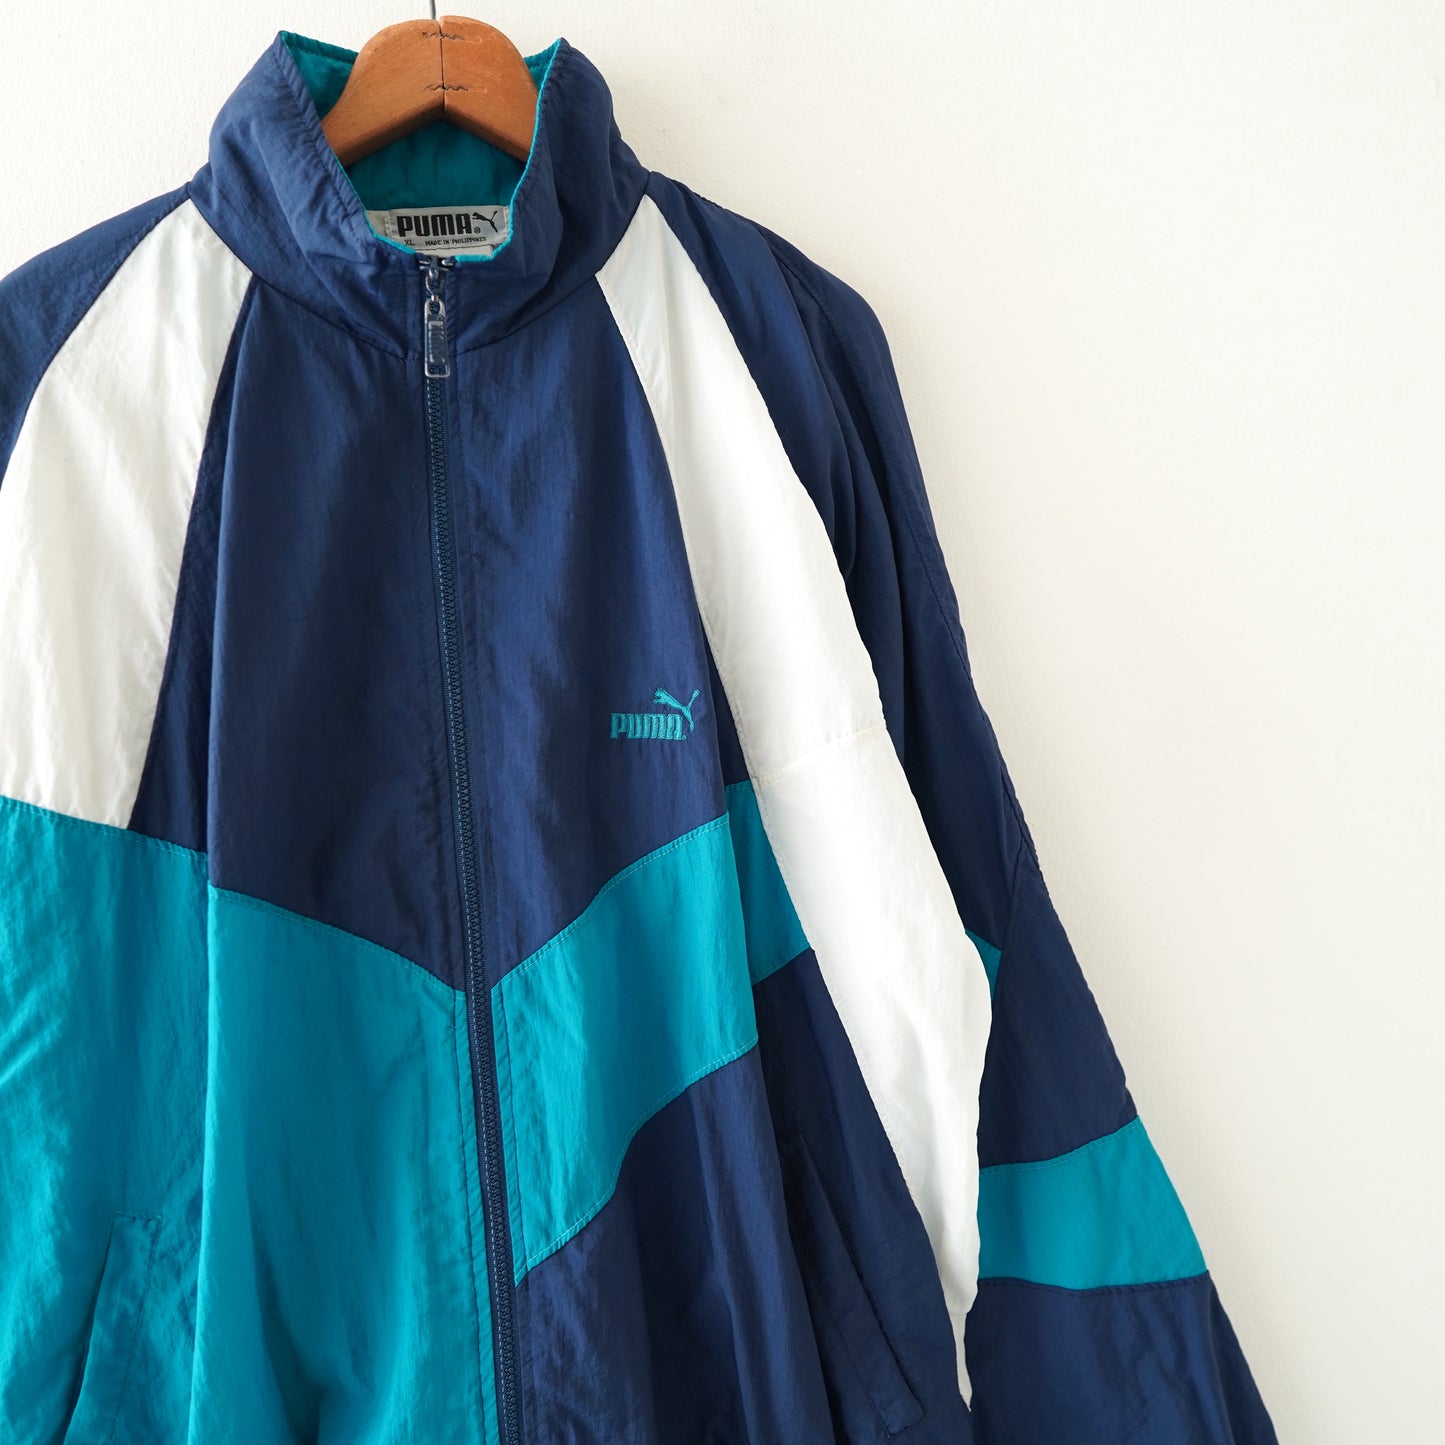 90s PUMA track jacket